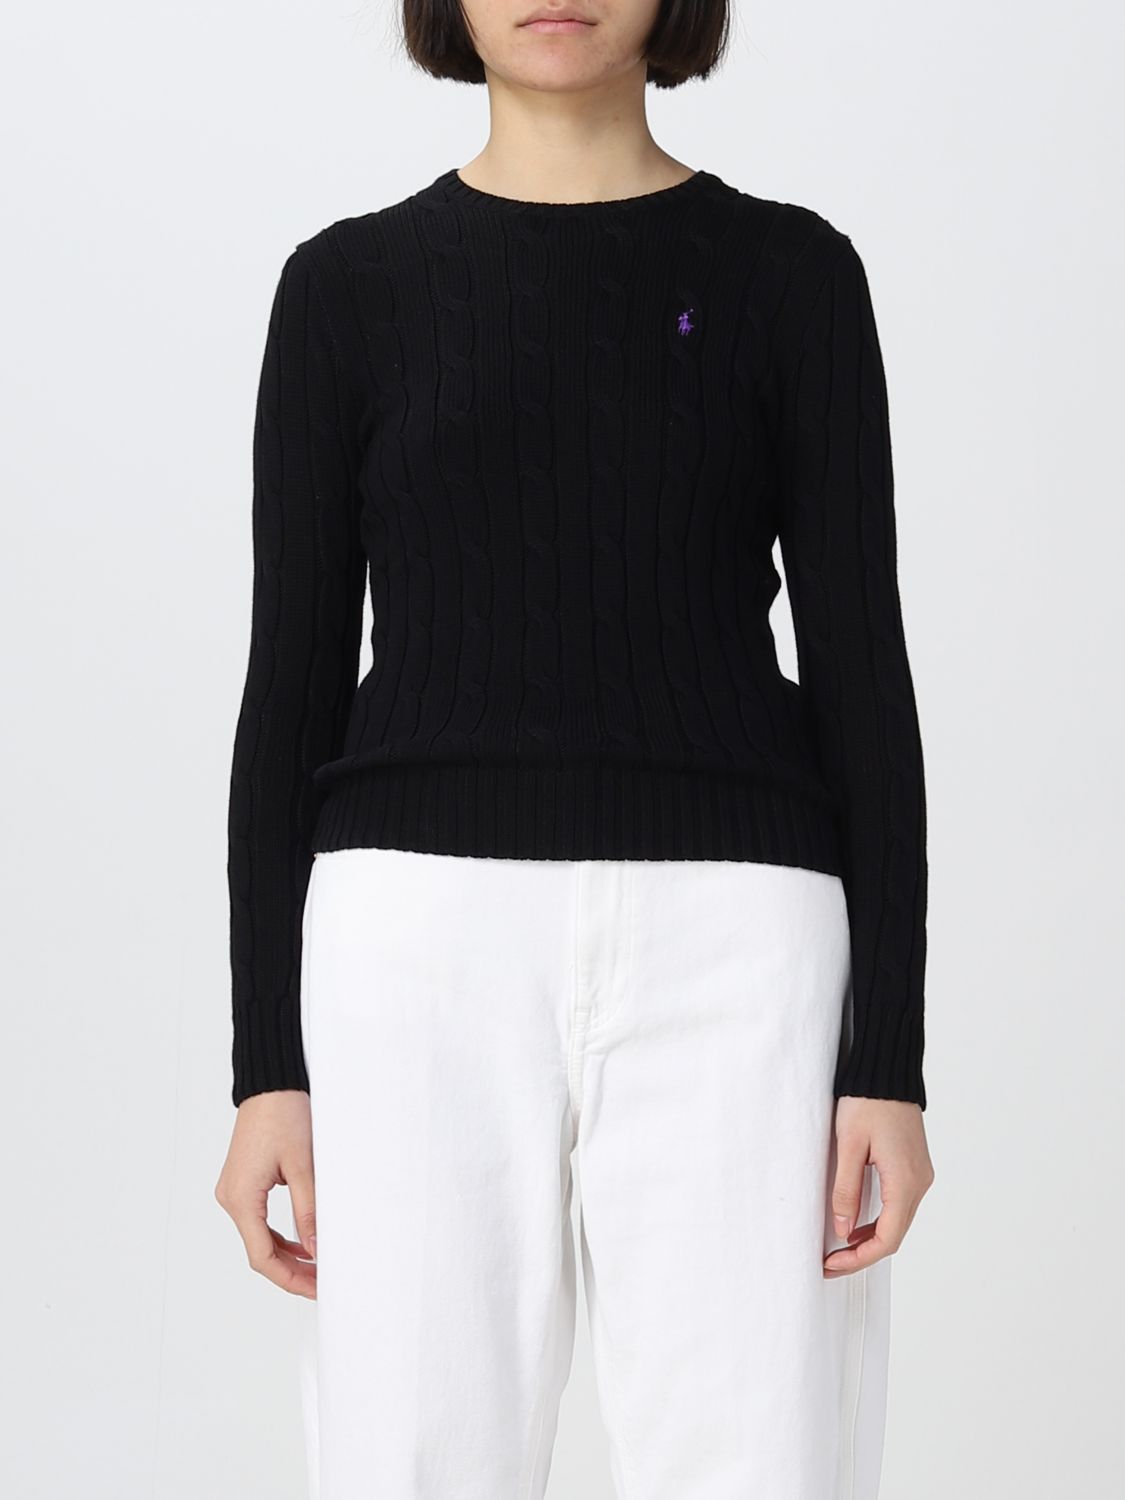 eksegese Produktion beundre POLO RALPH LAUREN: sweater for woman - Black | Polo Ralph Lauren sweater  211891640 online on GIGLIO.COM